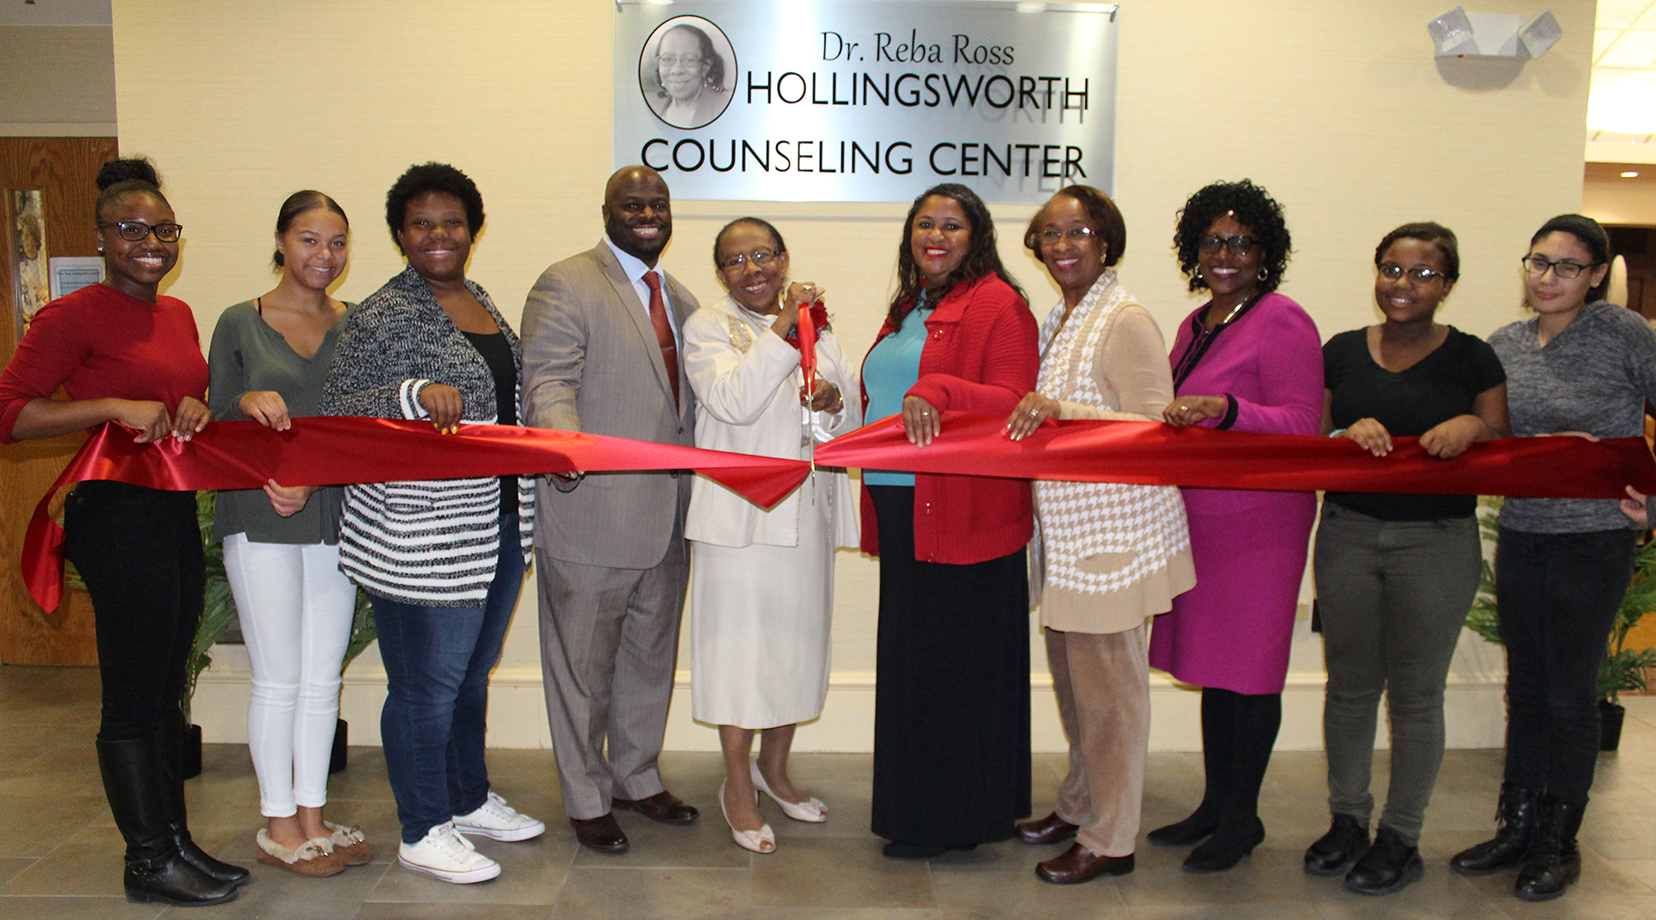 Dr. Reba Ross Hollingsworth Counseling Center celebrated